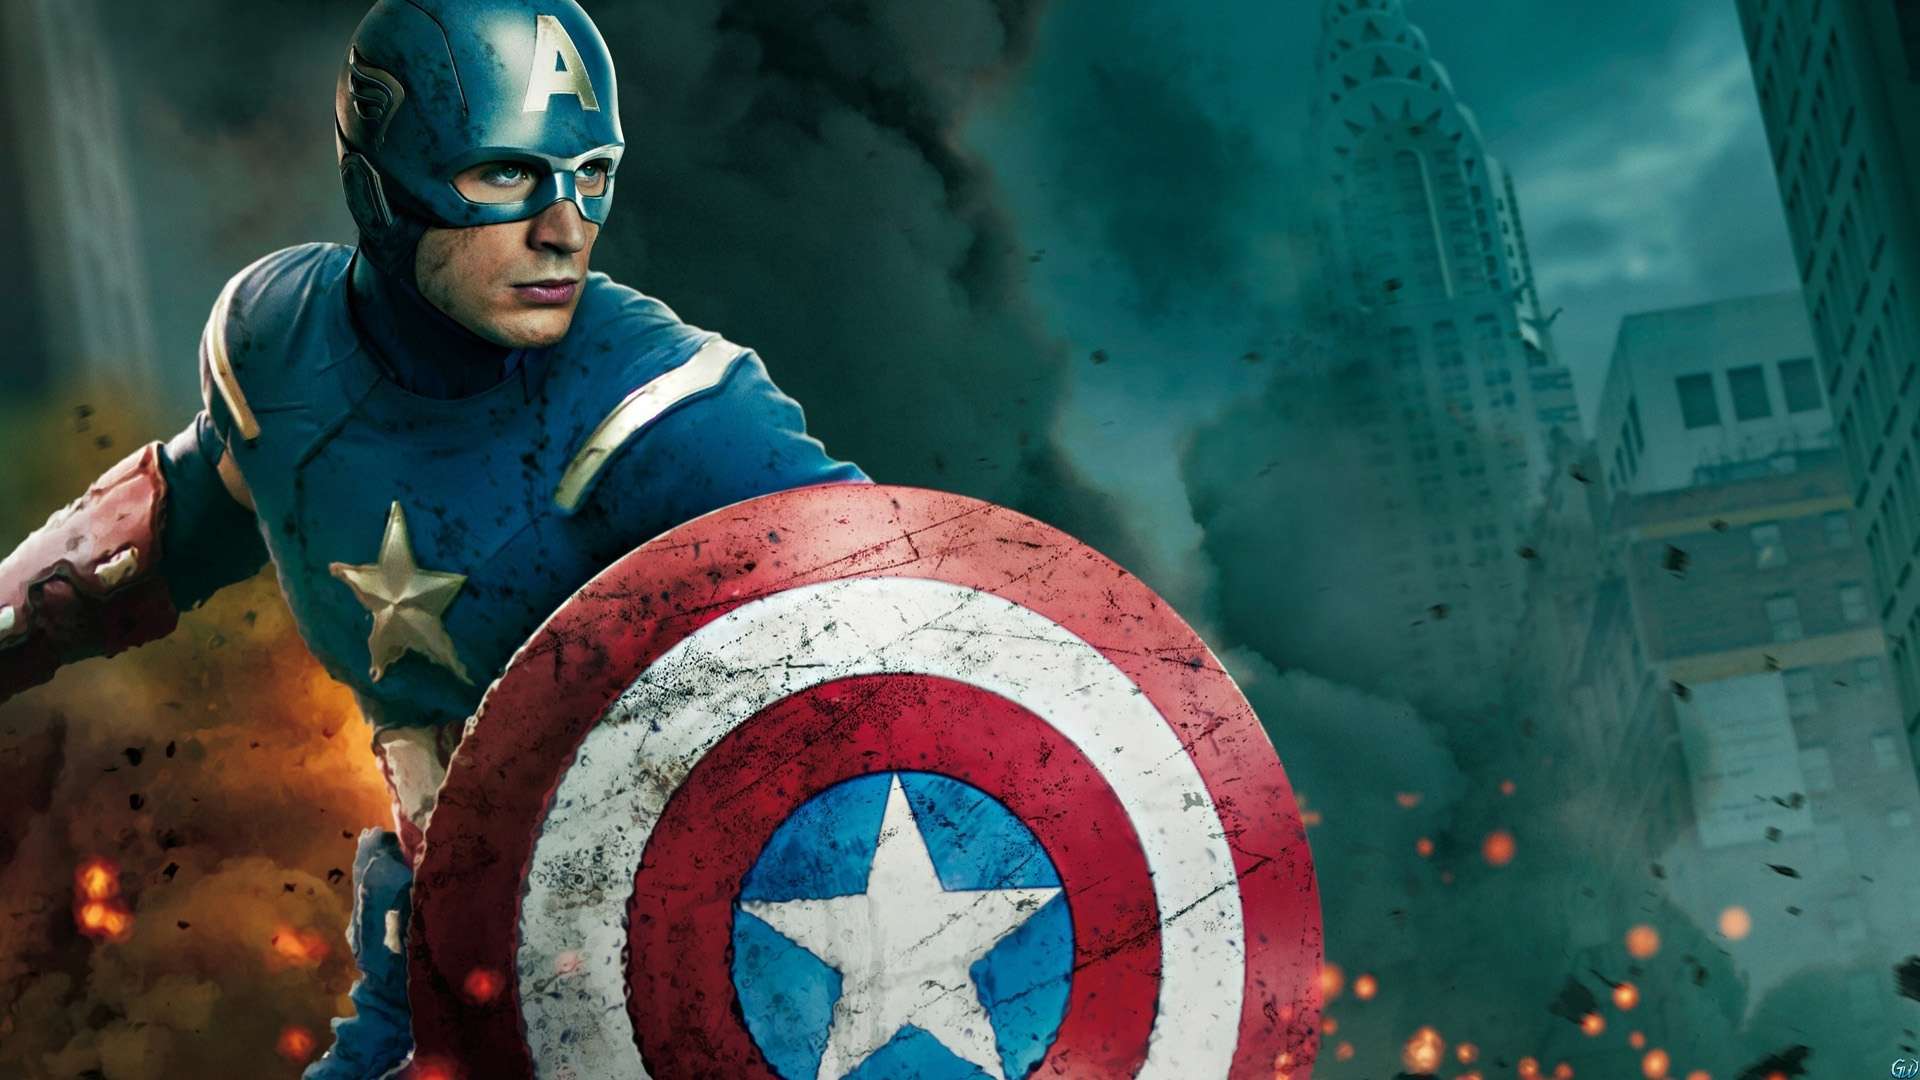 Captain America The Winter Soldier HD Wallpaper Image